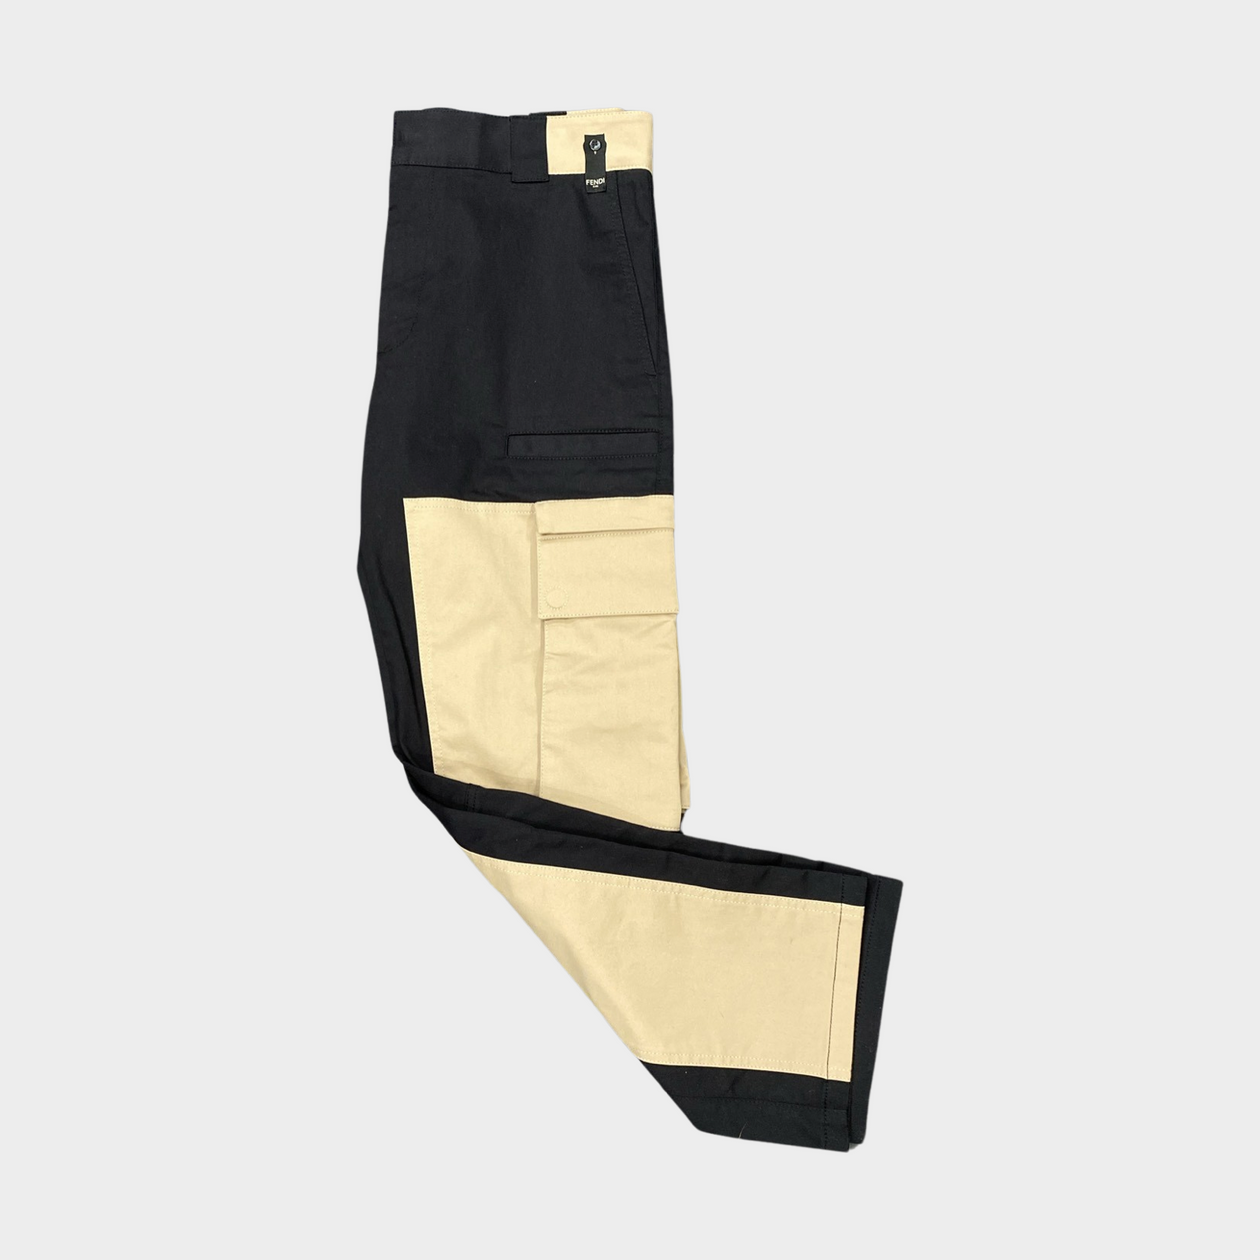 Fendi Men's Trousers Dress Pants Size 50 regular made in Italy